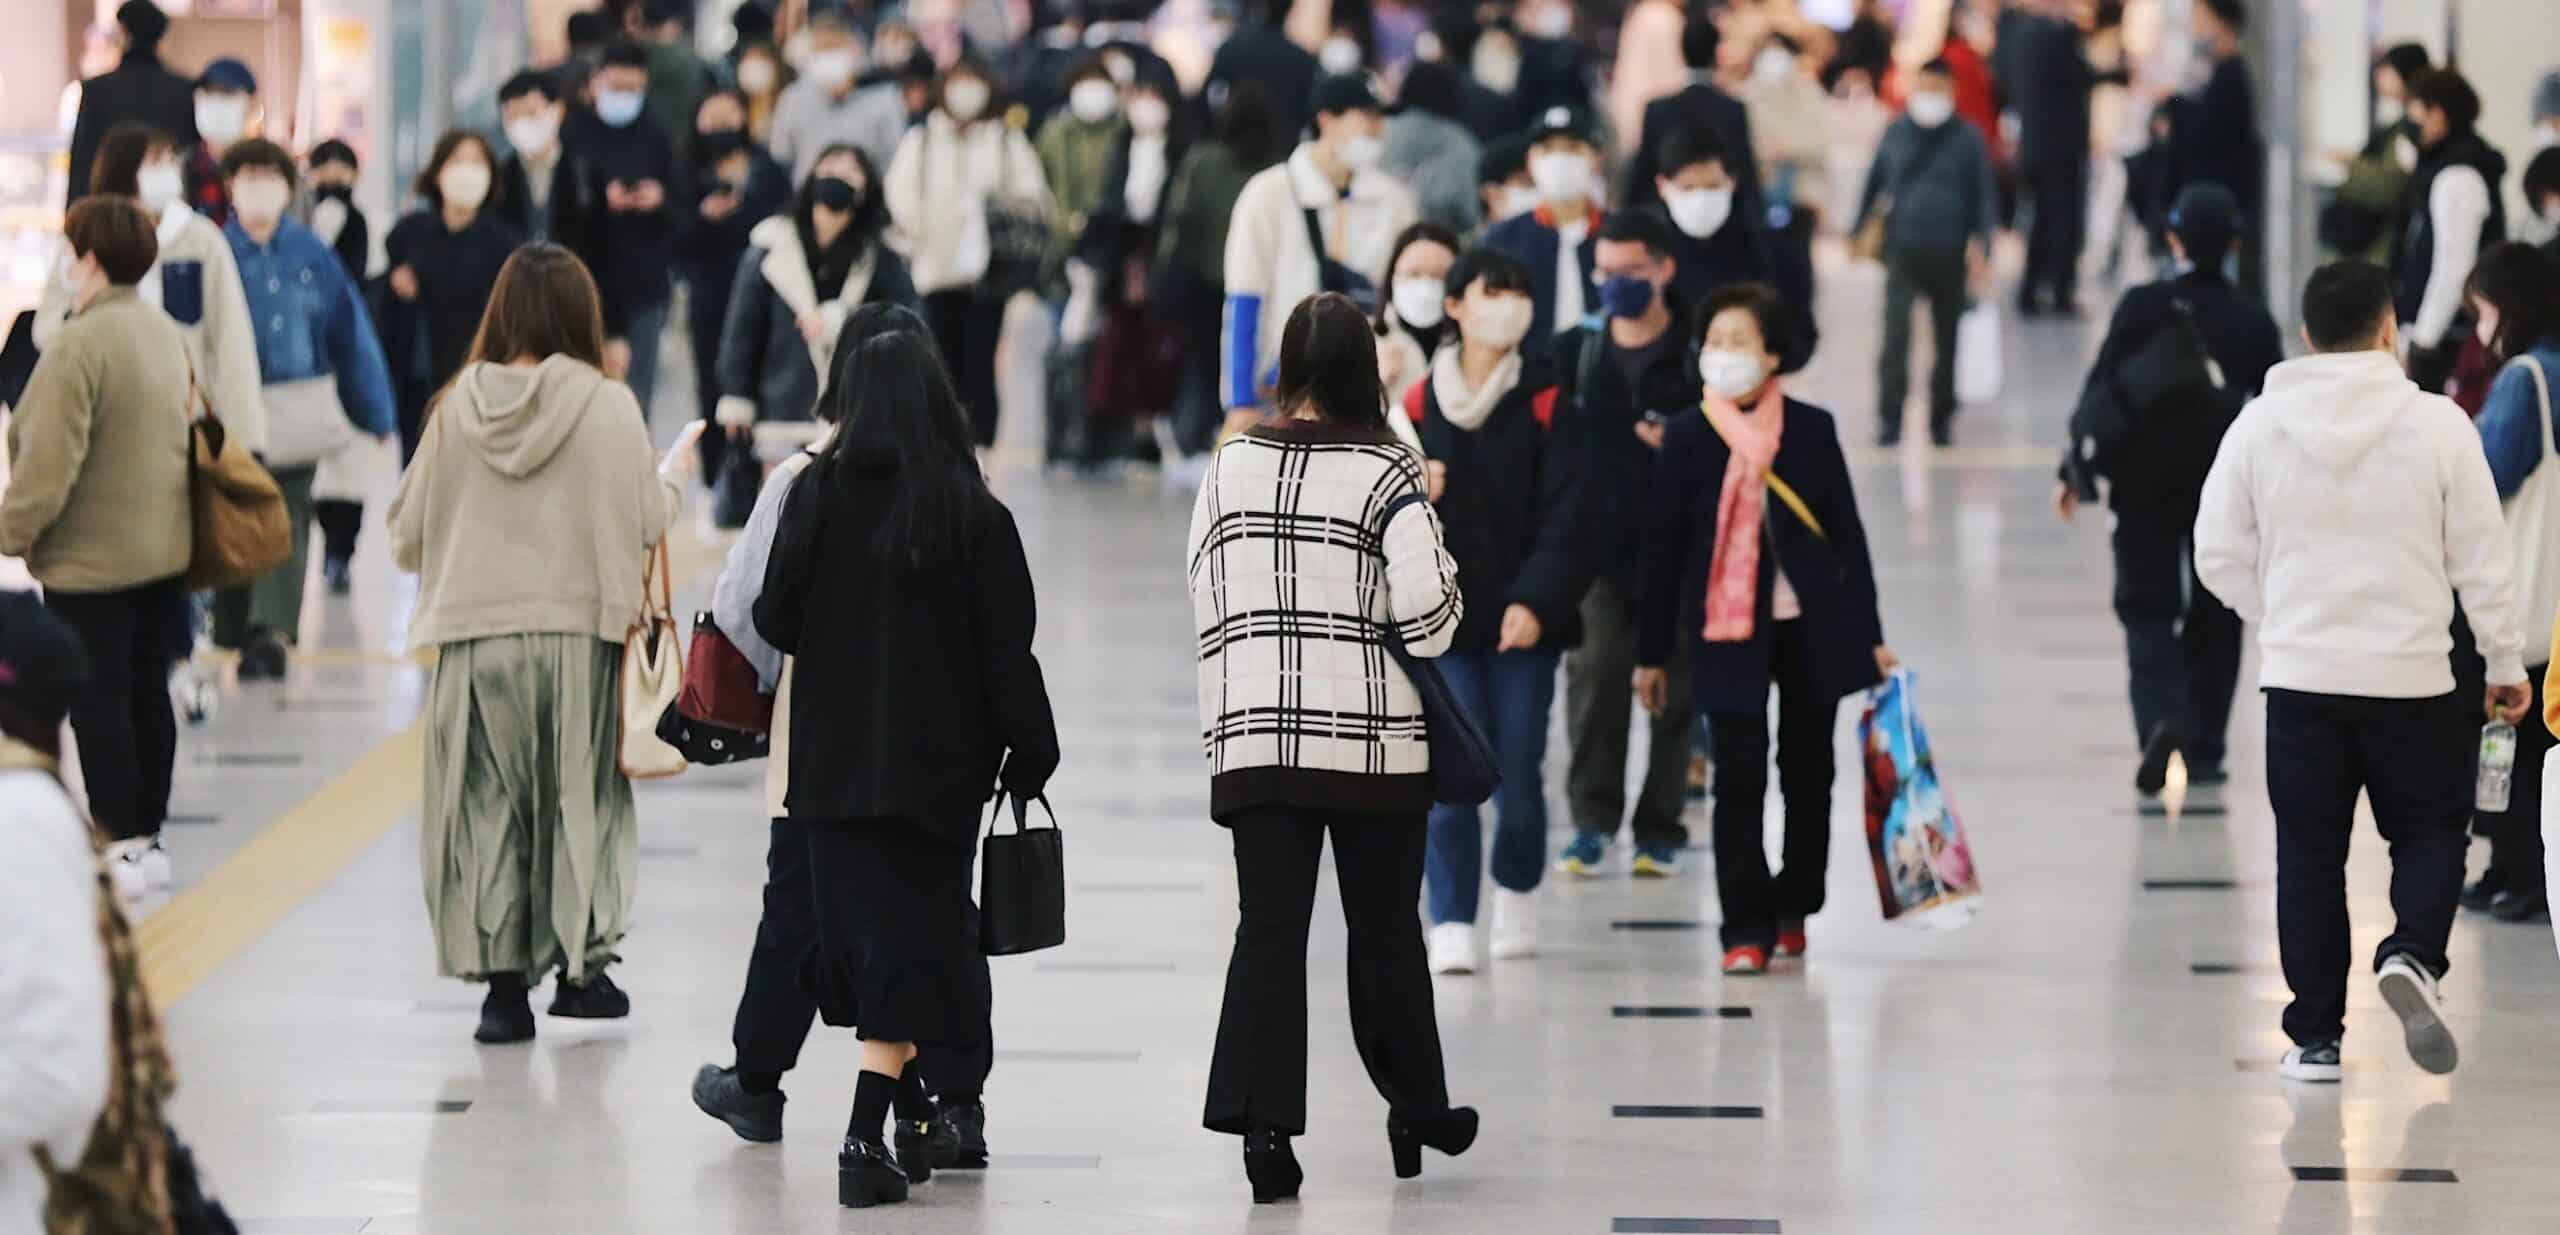 Japan’s Government Coronavirus Strategy: Pandemic Response, Measures, and Preparedness